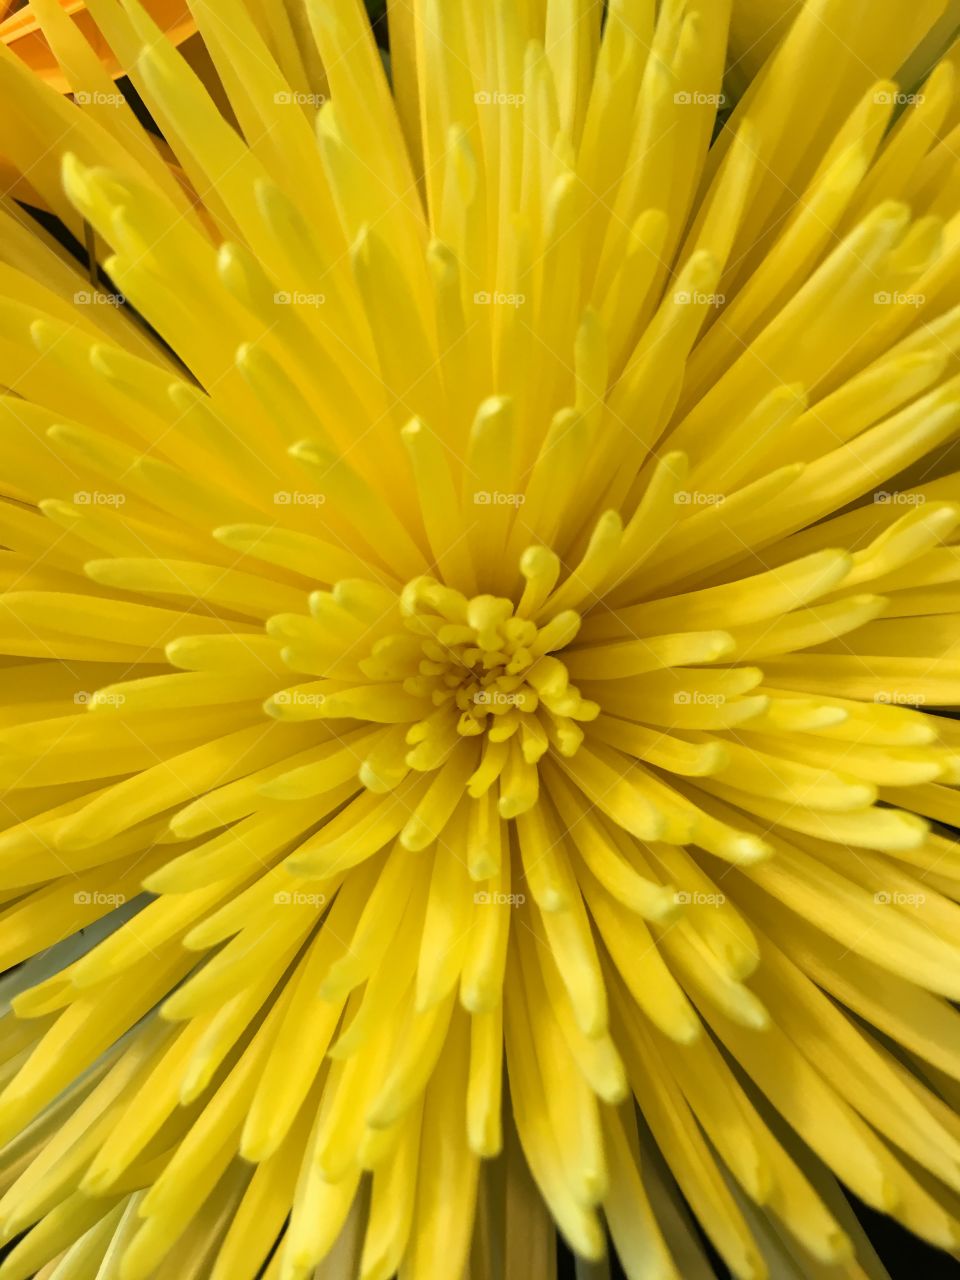 Flower burst of yellow!